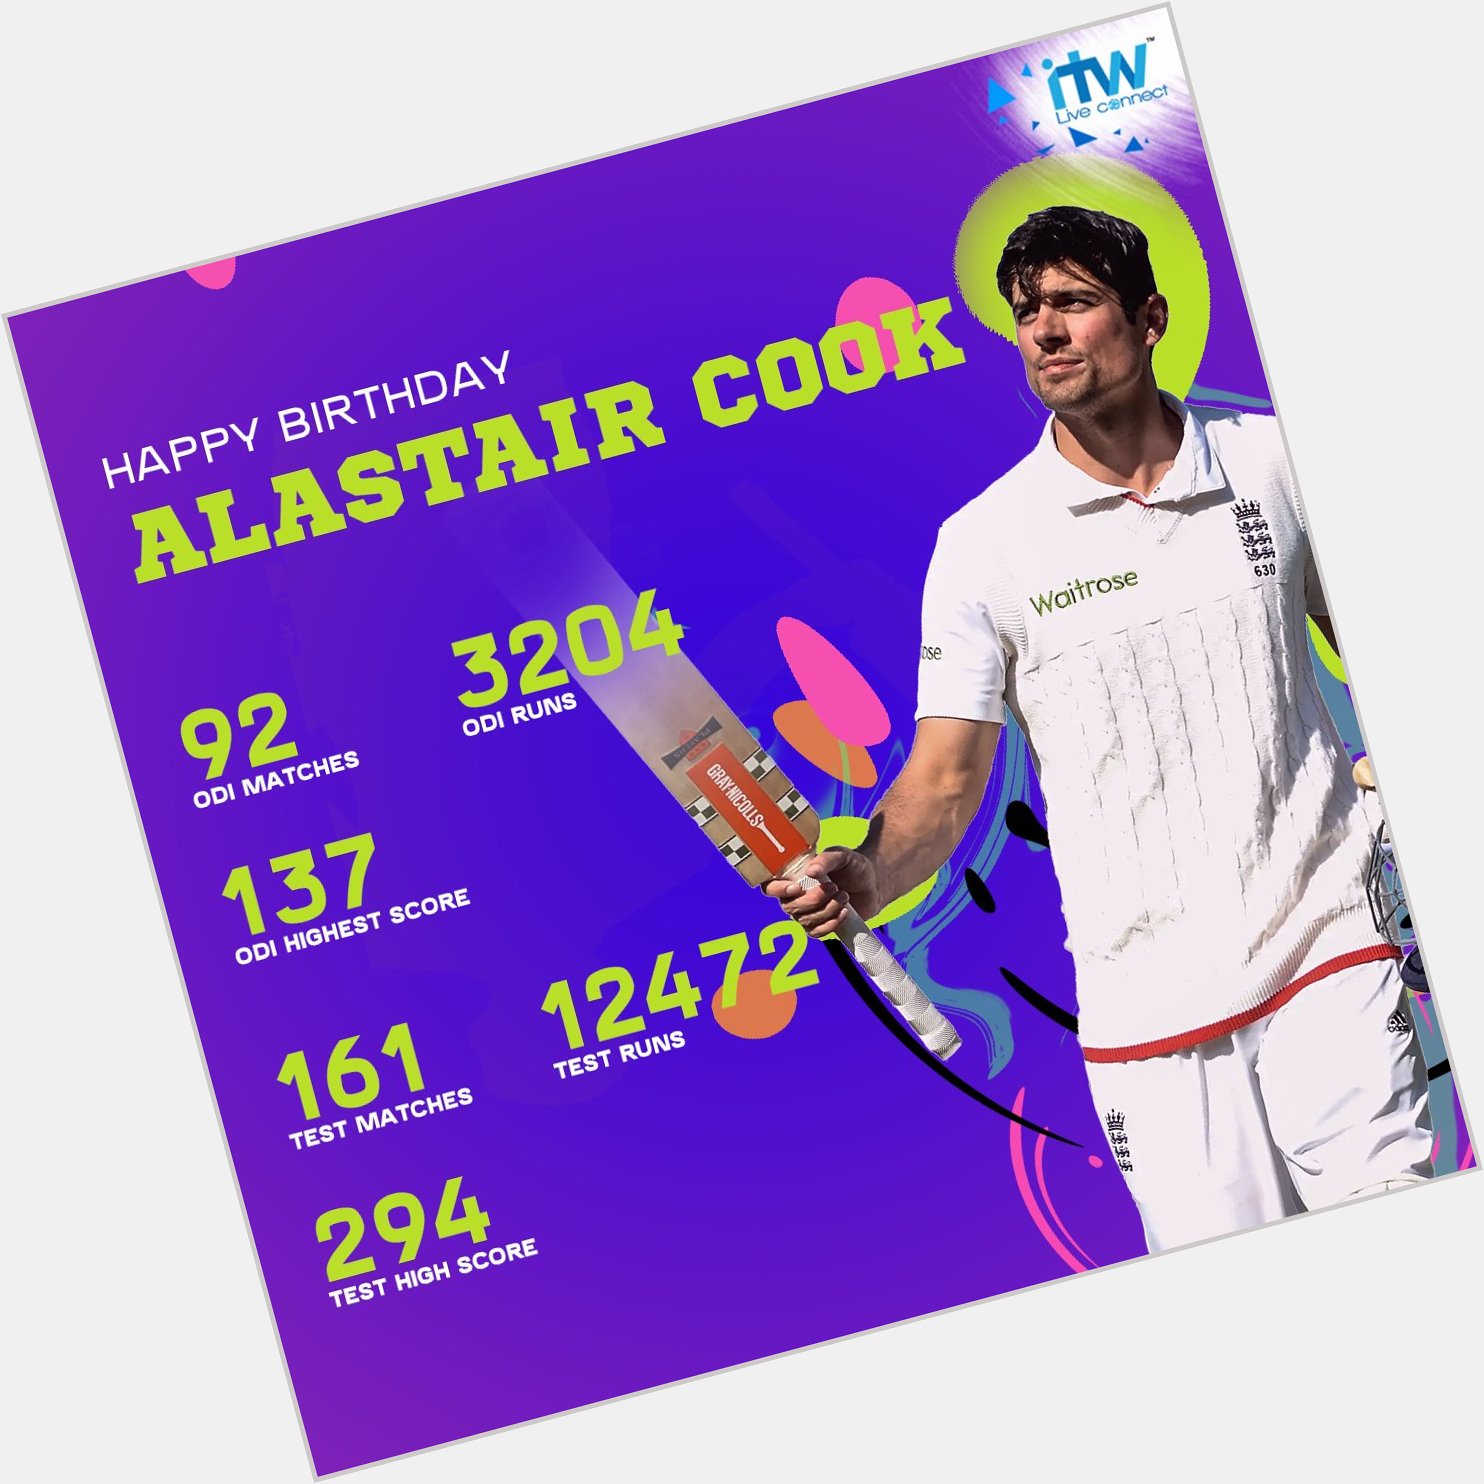 Happy Birthday Alastair Cook! The very first batsman to make 10,000 test runs. 